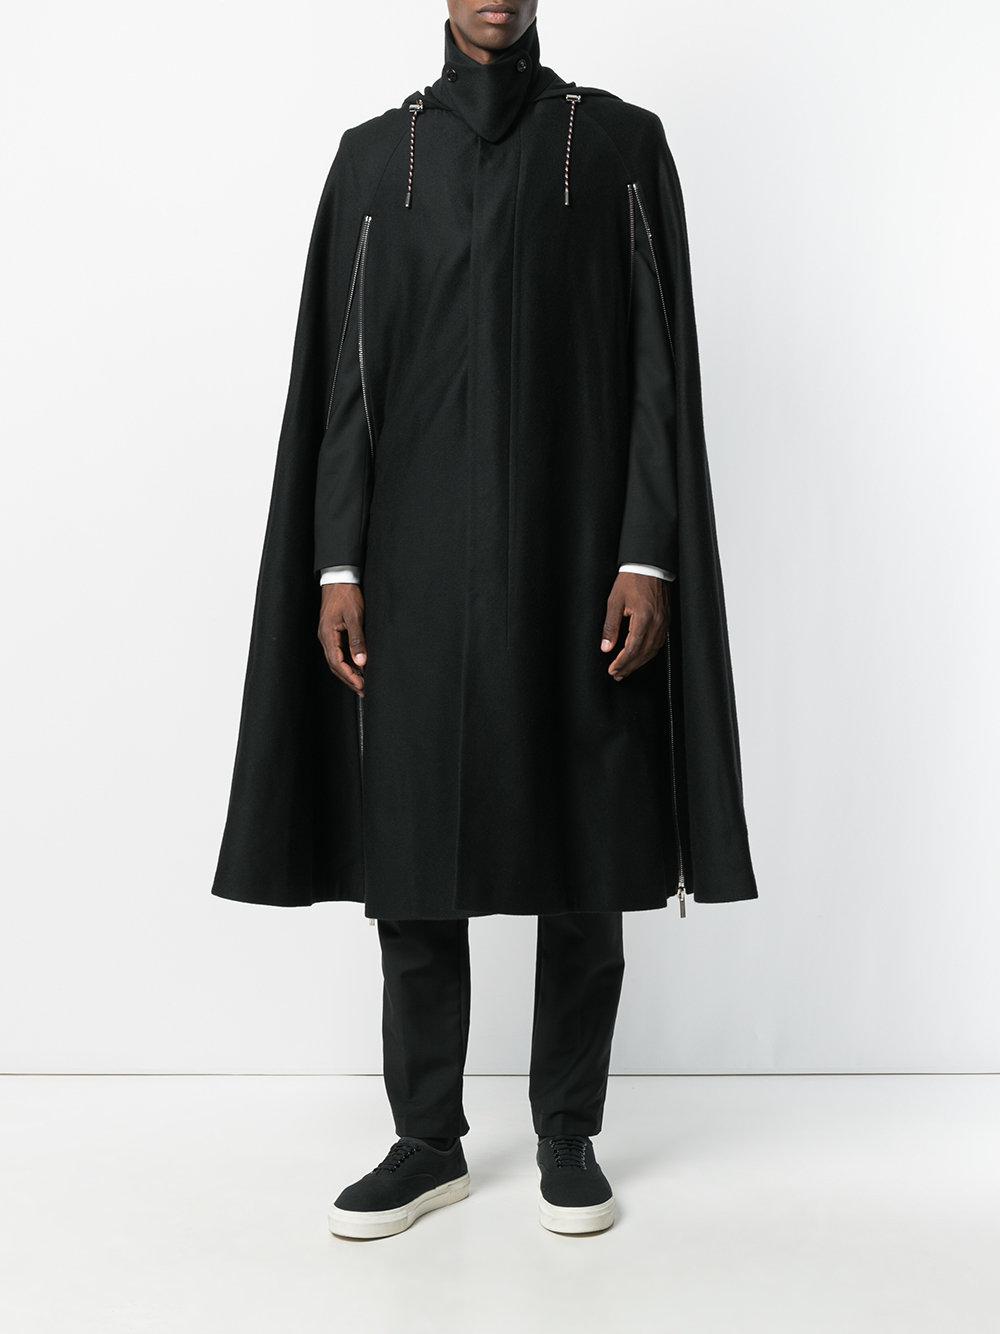 Dior Homme Wool Oversized Cape Coat in Black for Men - Lyst